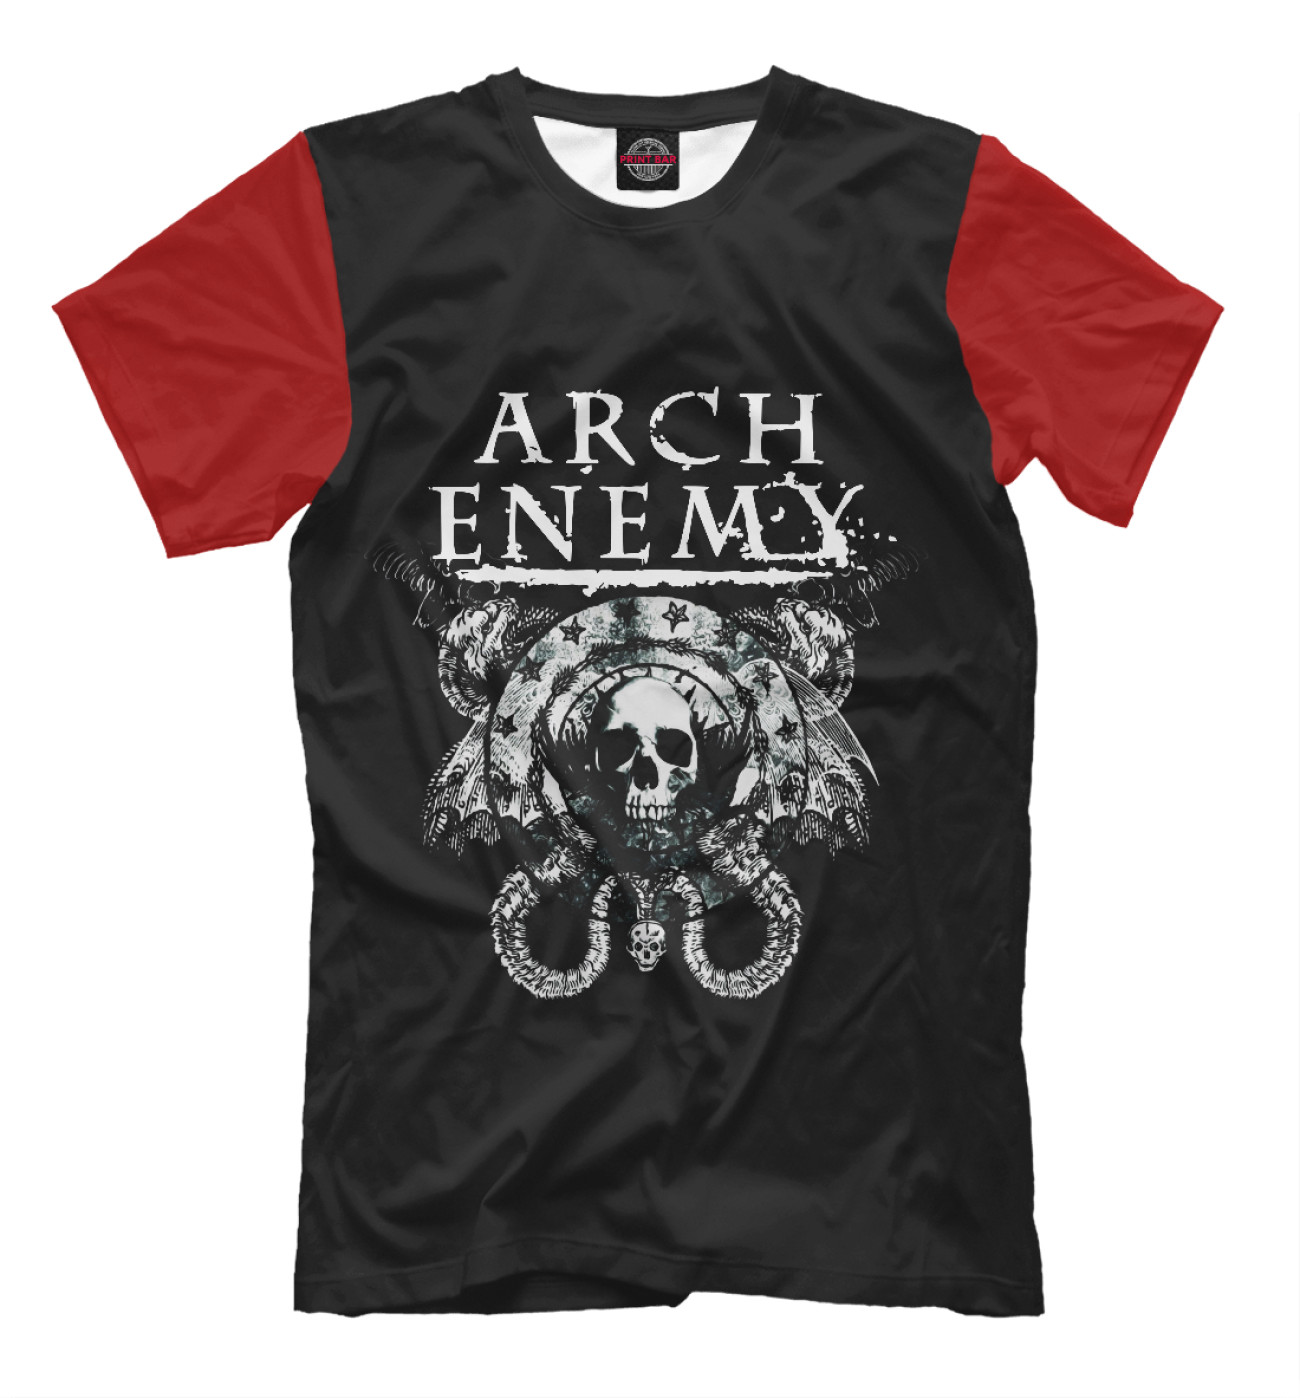 Мужская Футболка Arch Enemy, артикул: AEN-759509-fut-2